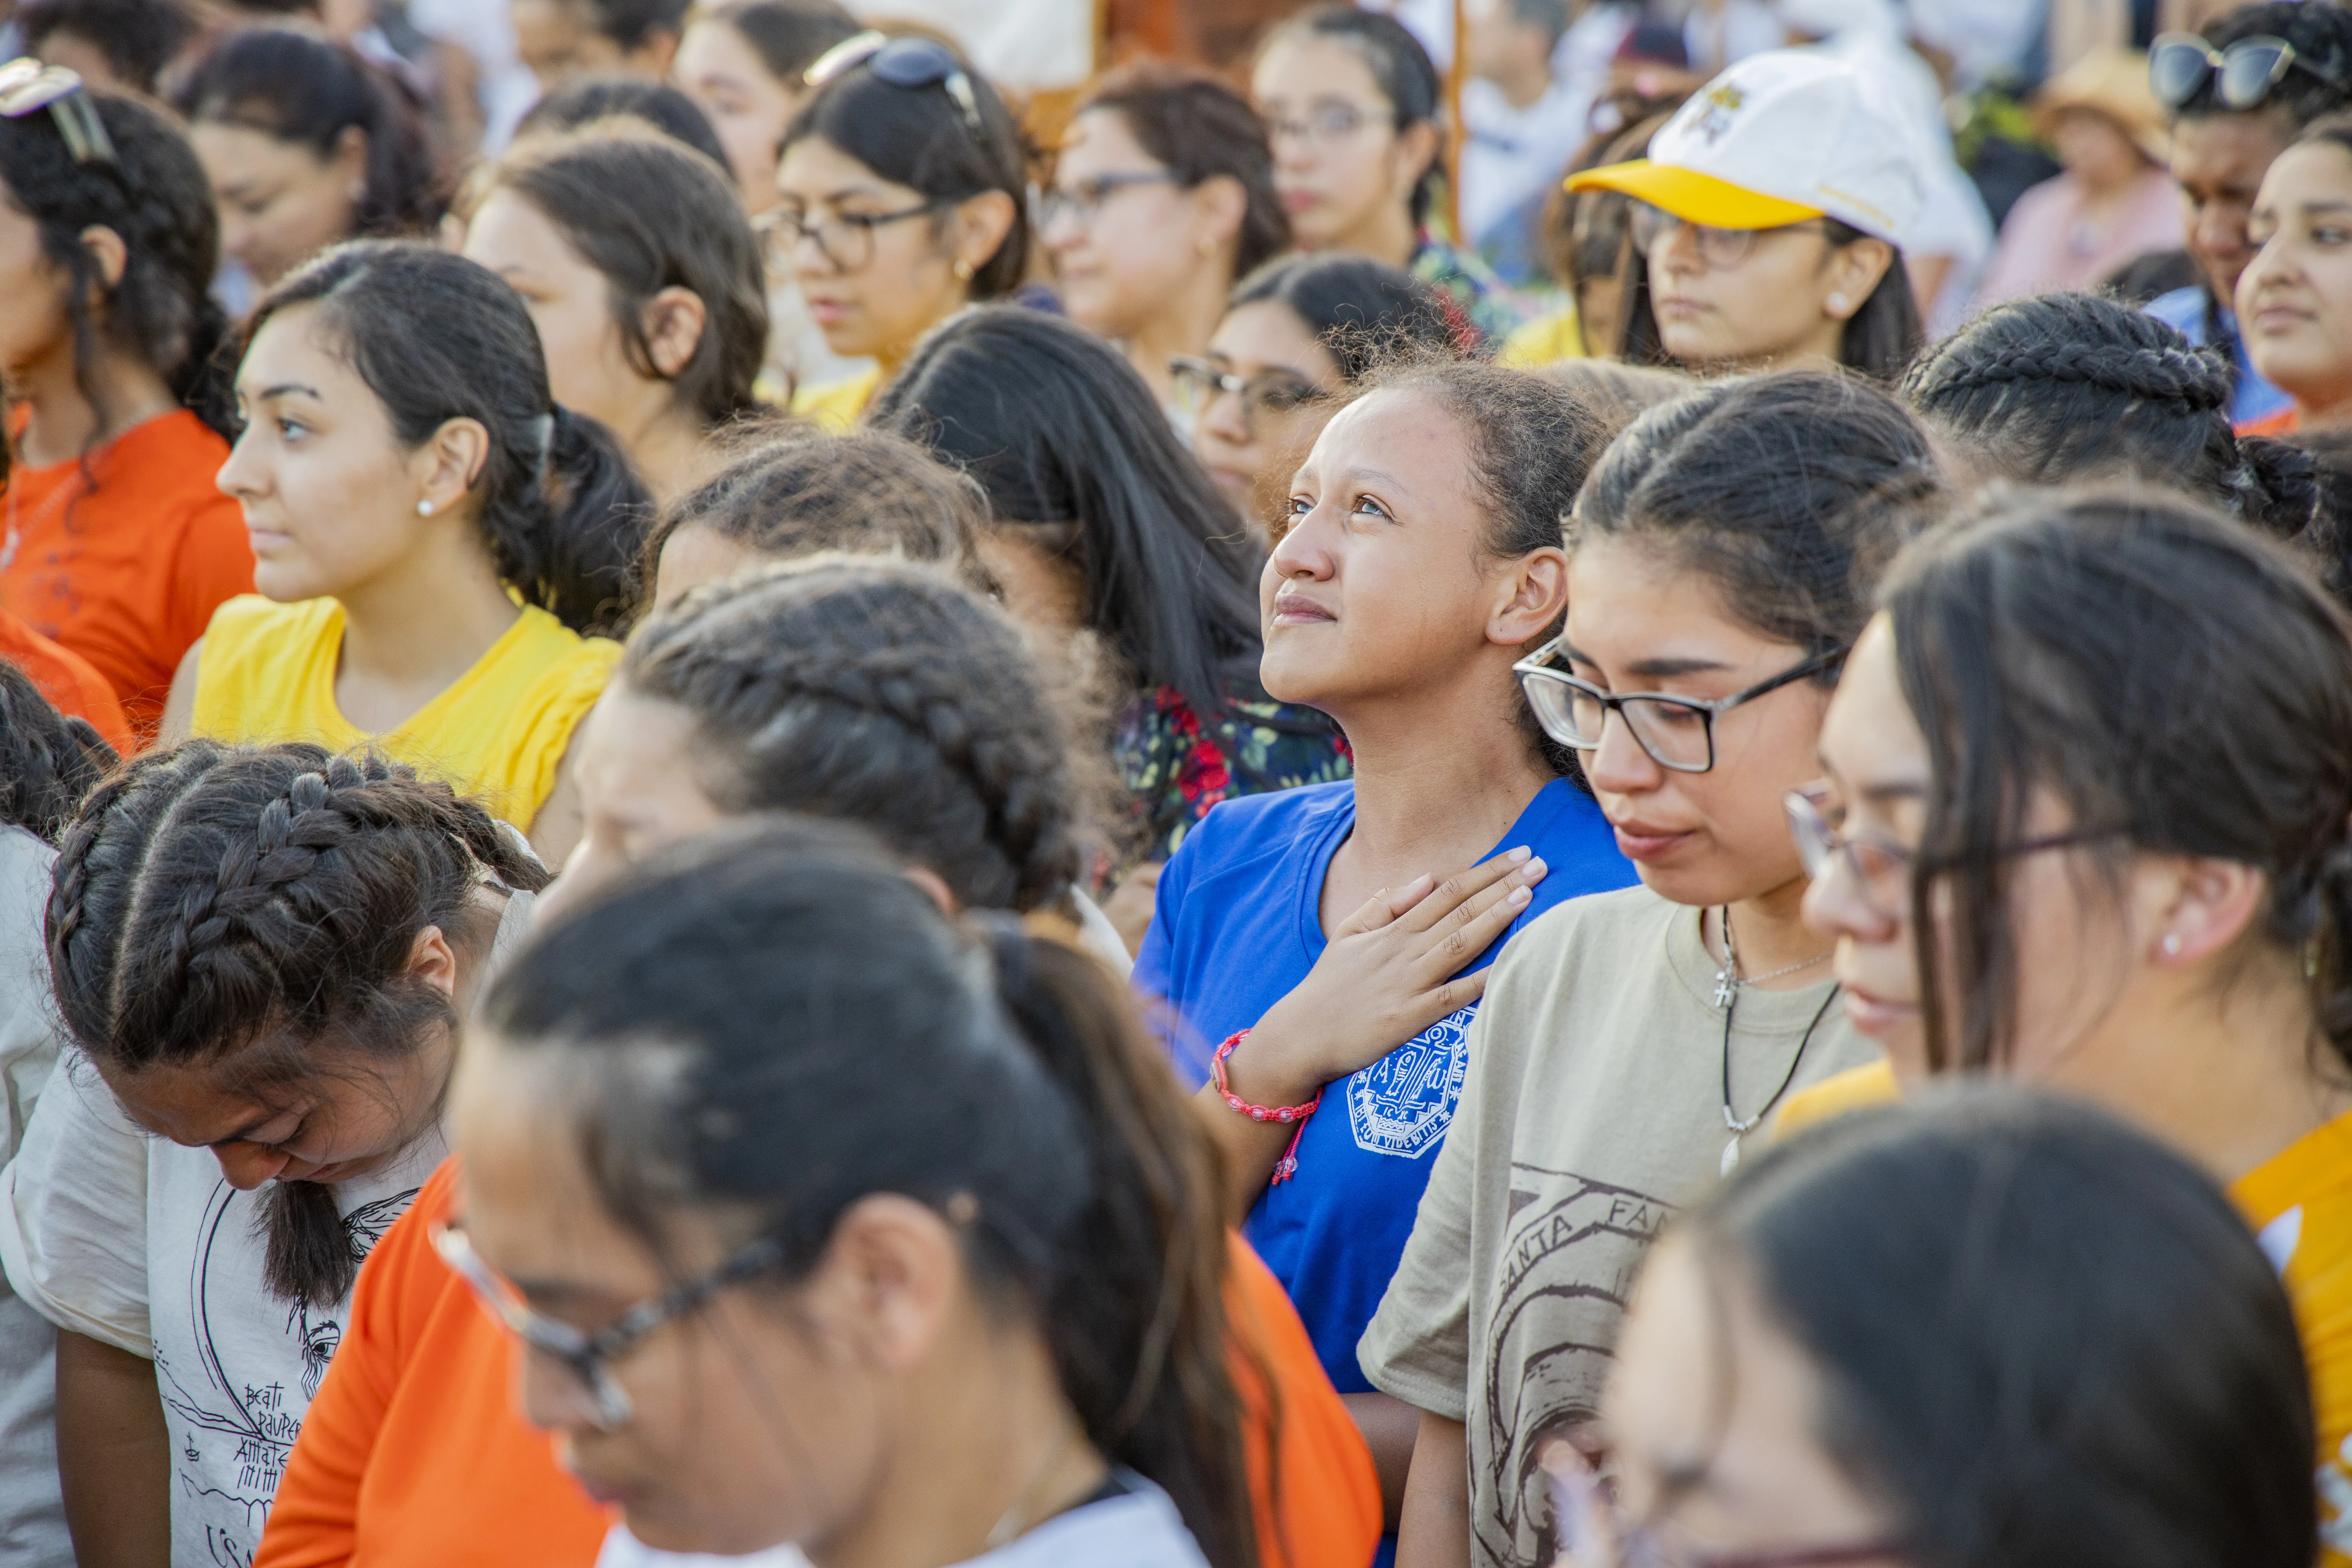 Young Catholics praying on the Mount of Beatitudes, July 19, 2022. Courtesy photo / Neocatechumenal Way